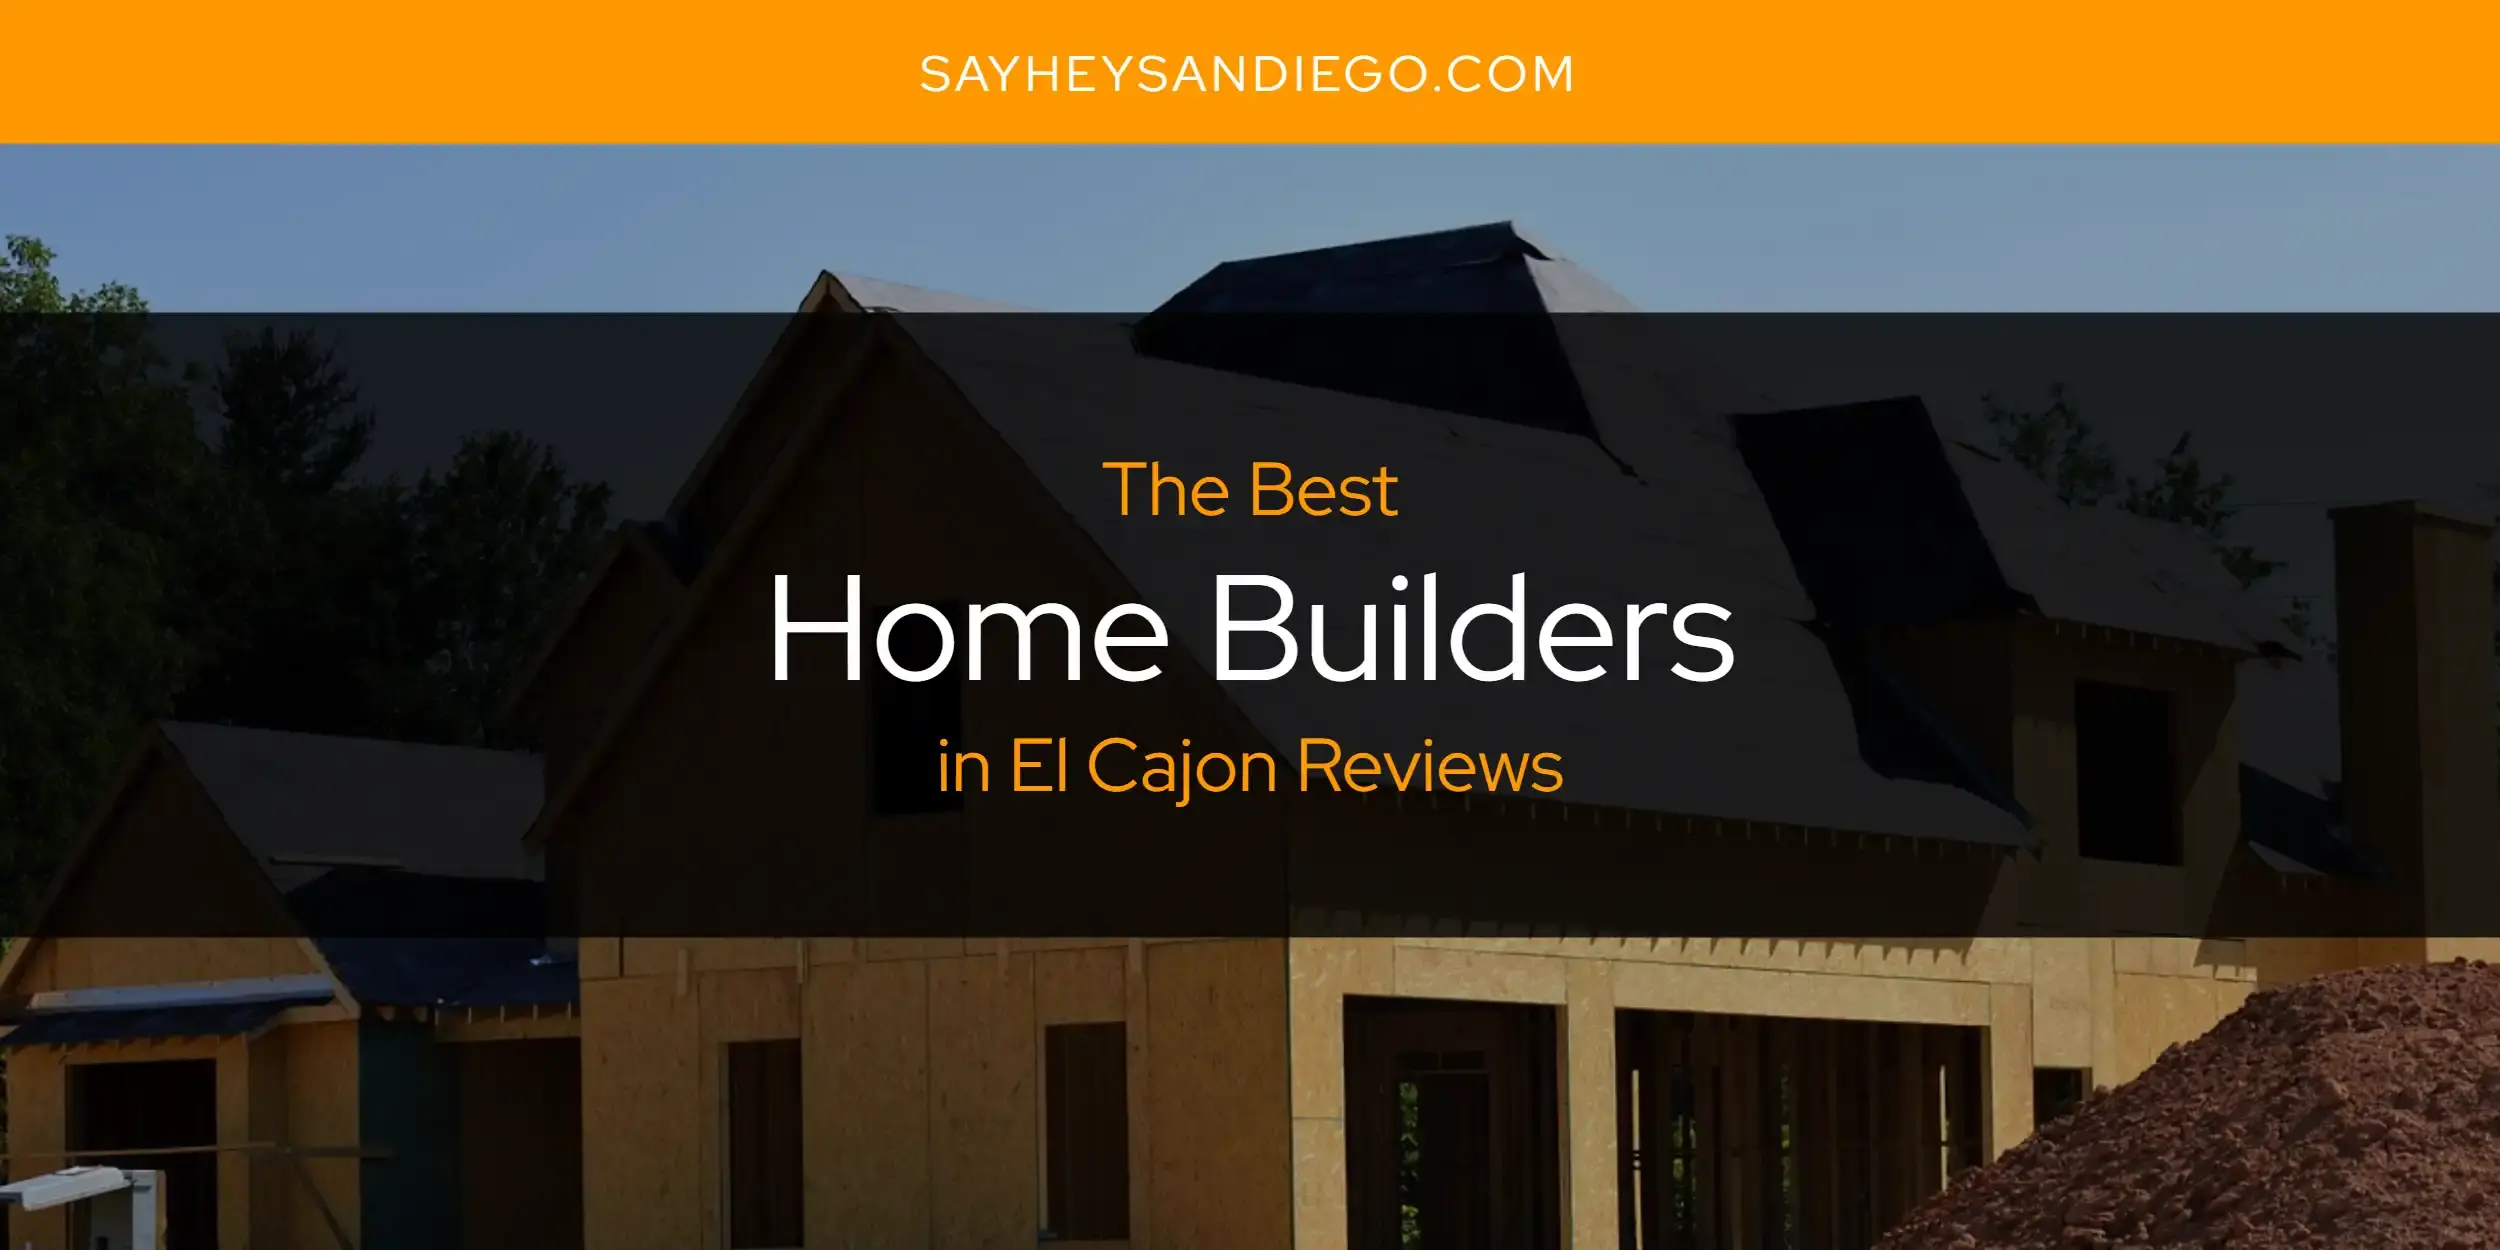 Best Home Builders in El Cajon Reviews? Here's the Top 13